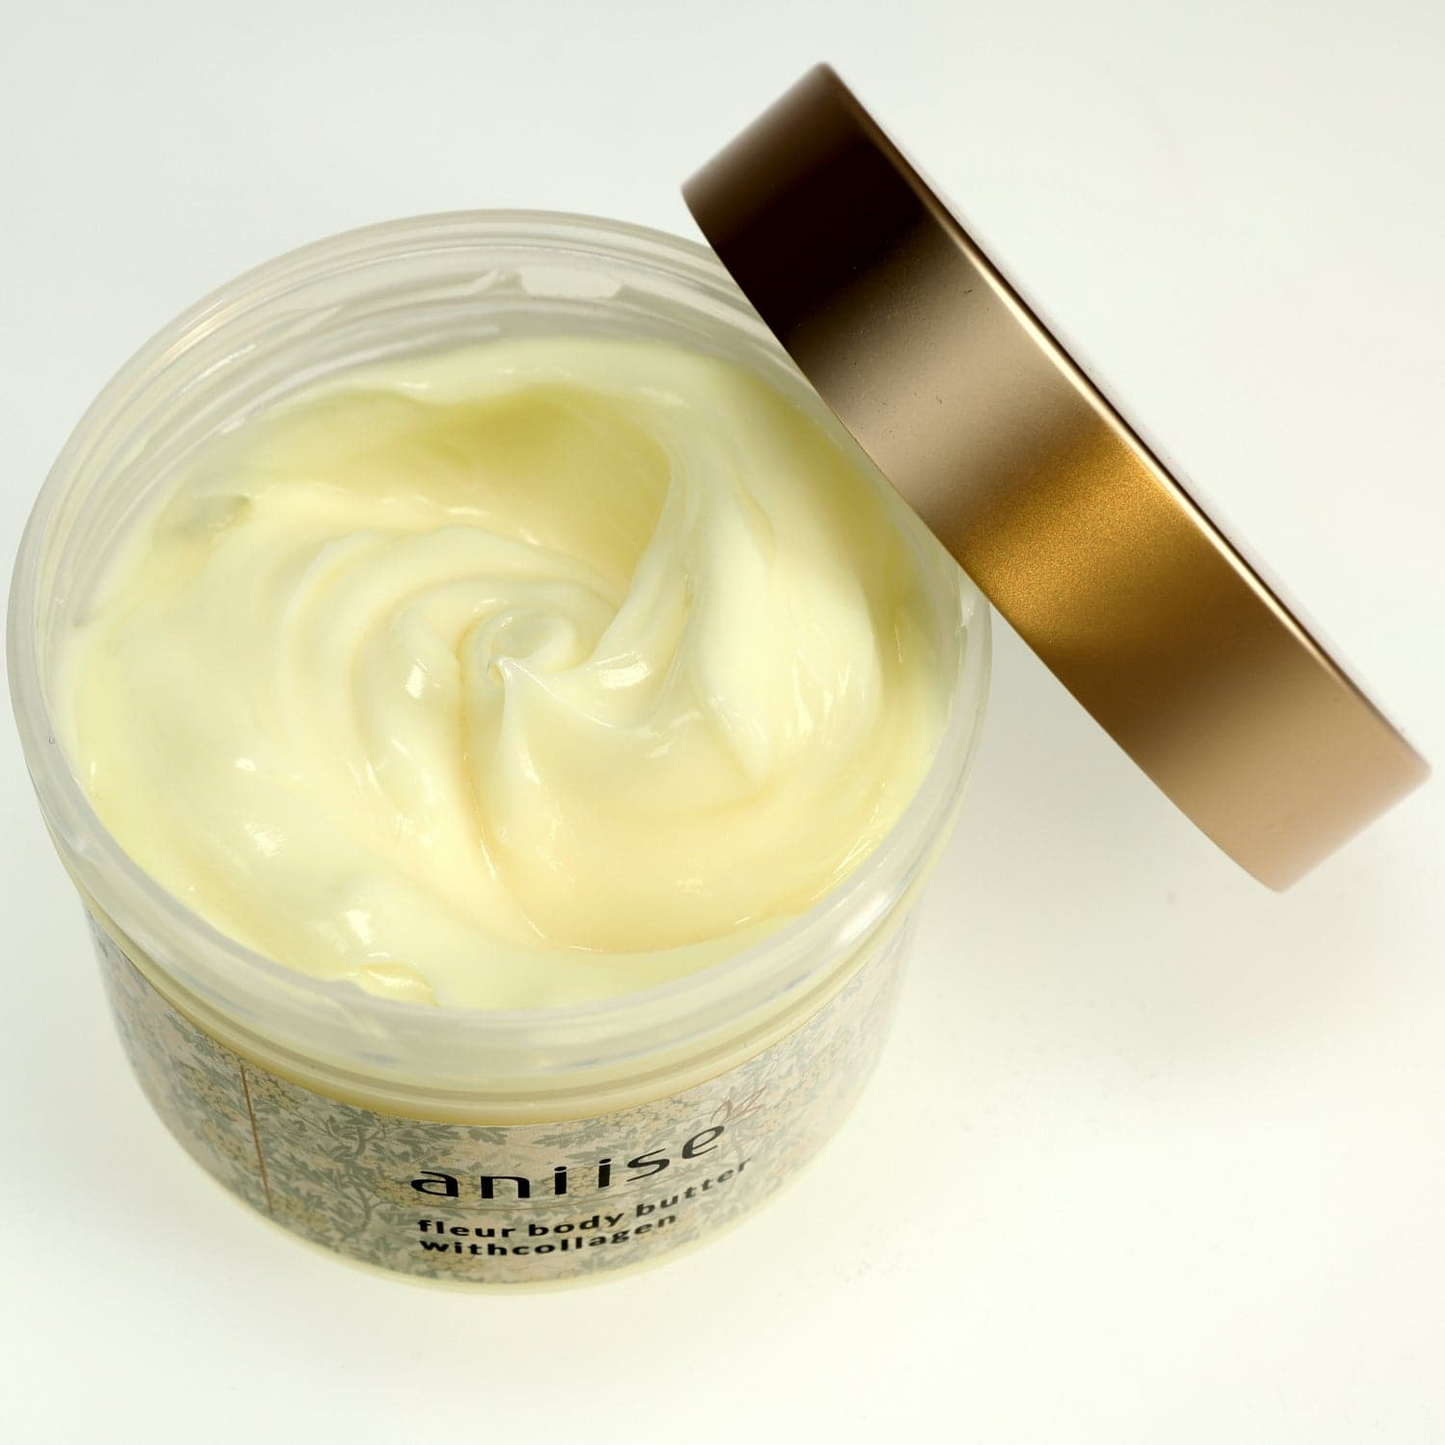 Moisturizing Body Butter Cream with Collagen